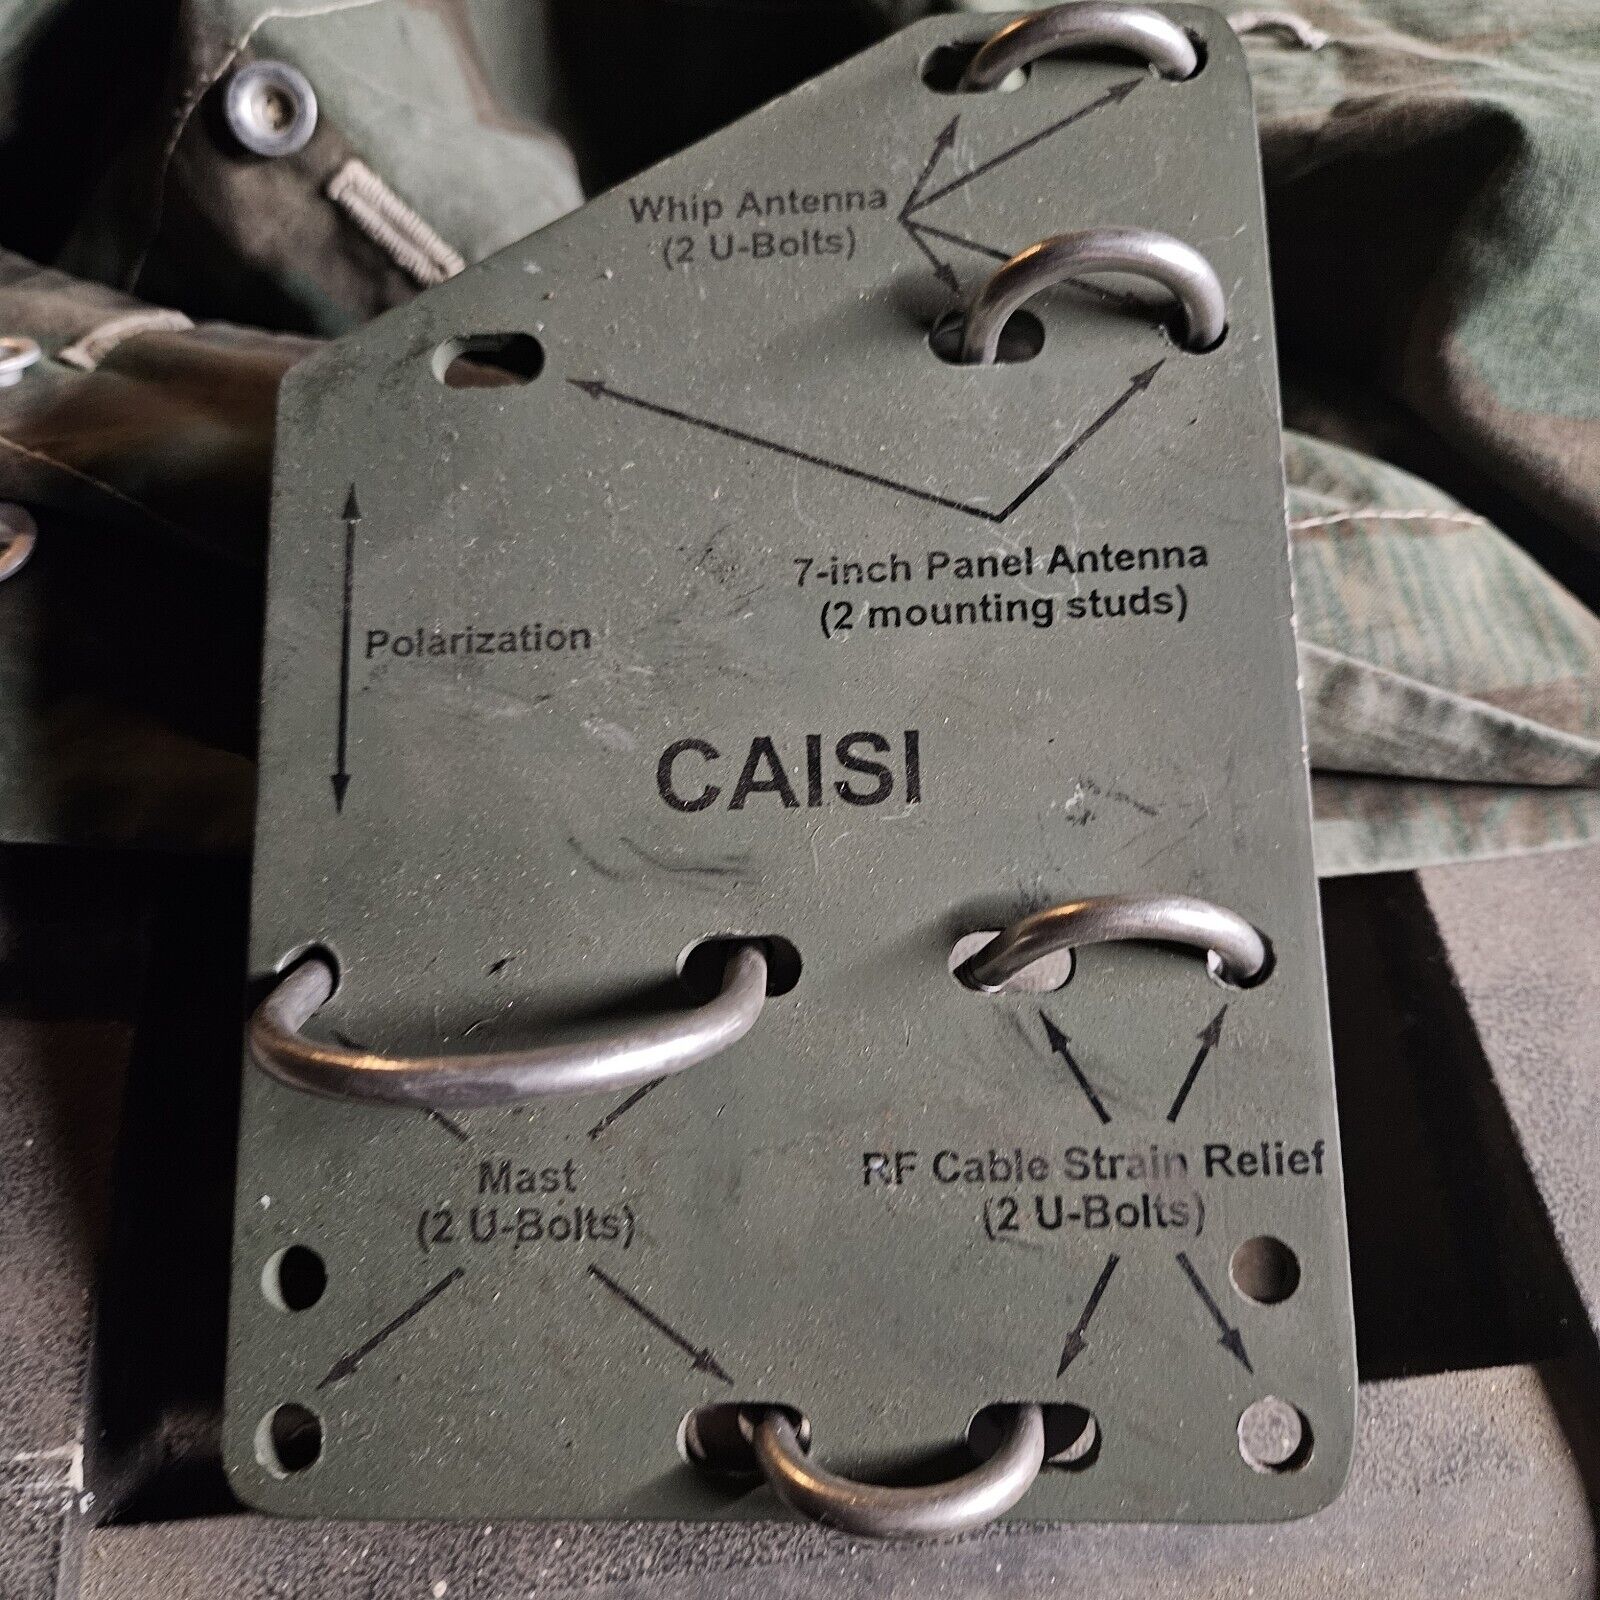  CAISI Antenna Bracket, for Military Radio Antenna Setup